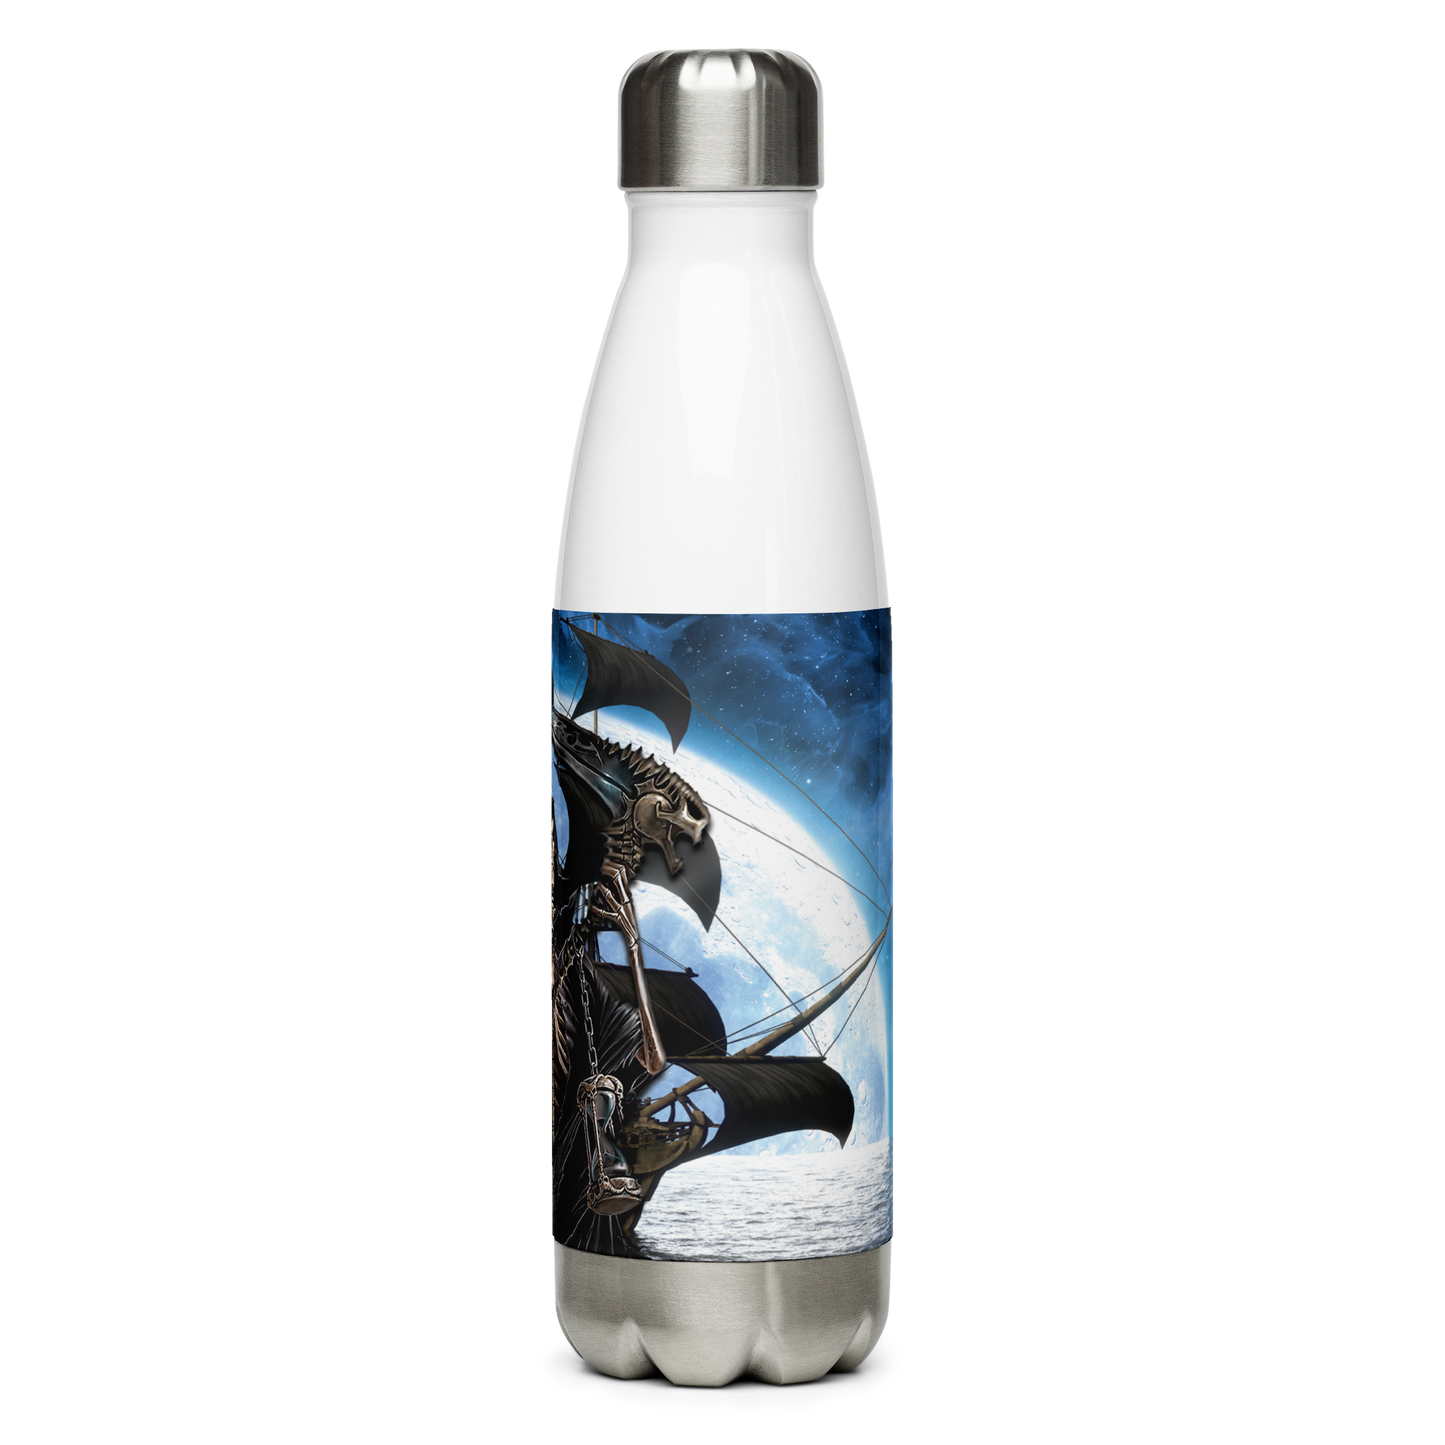 Salt Reaper - The Reaper Stainless Steel Water Bottle